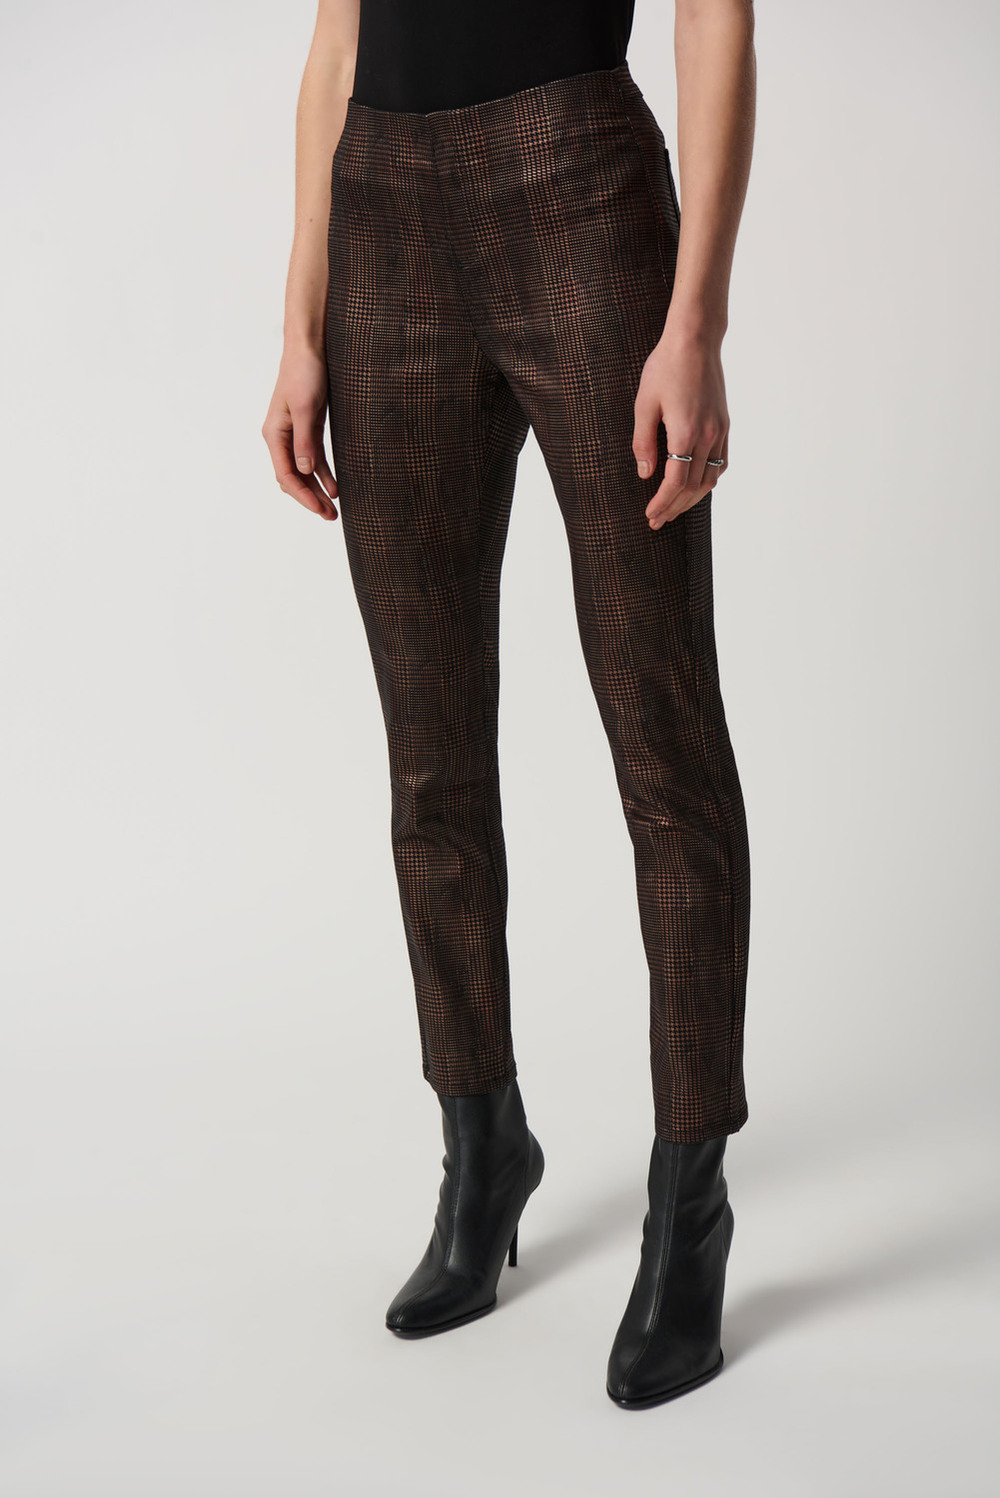 Metallic Plaid Pants Style 234925. Black/bronze